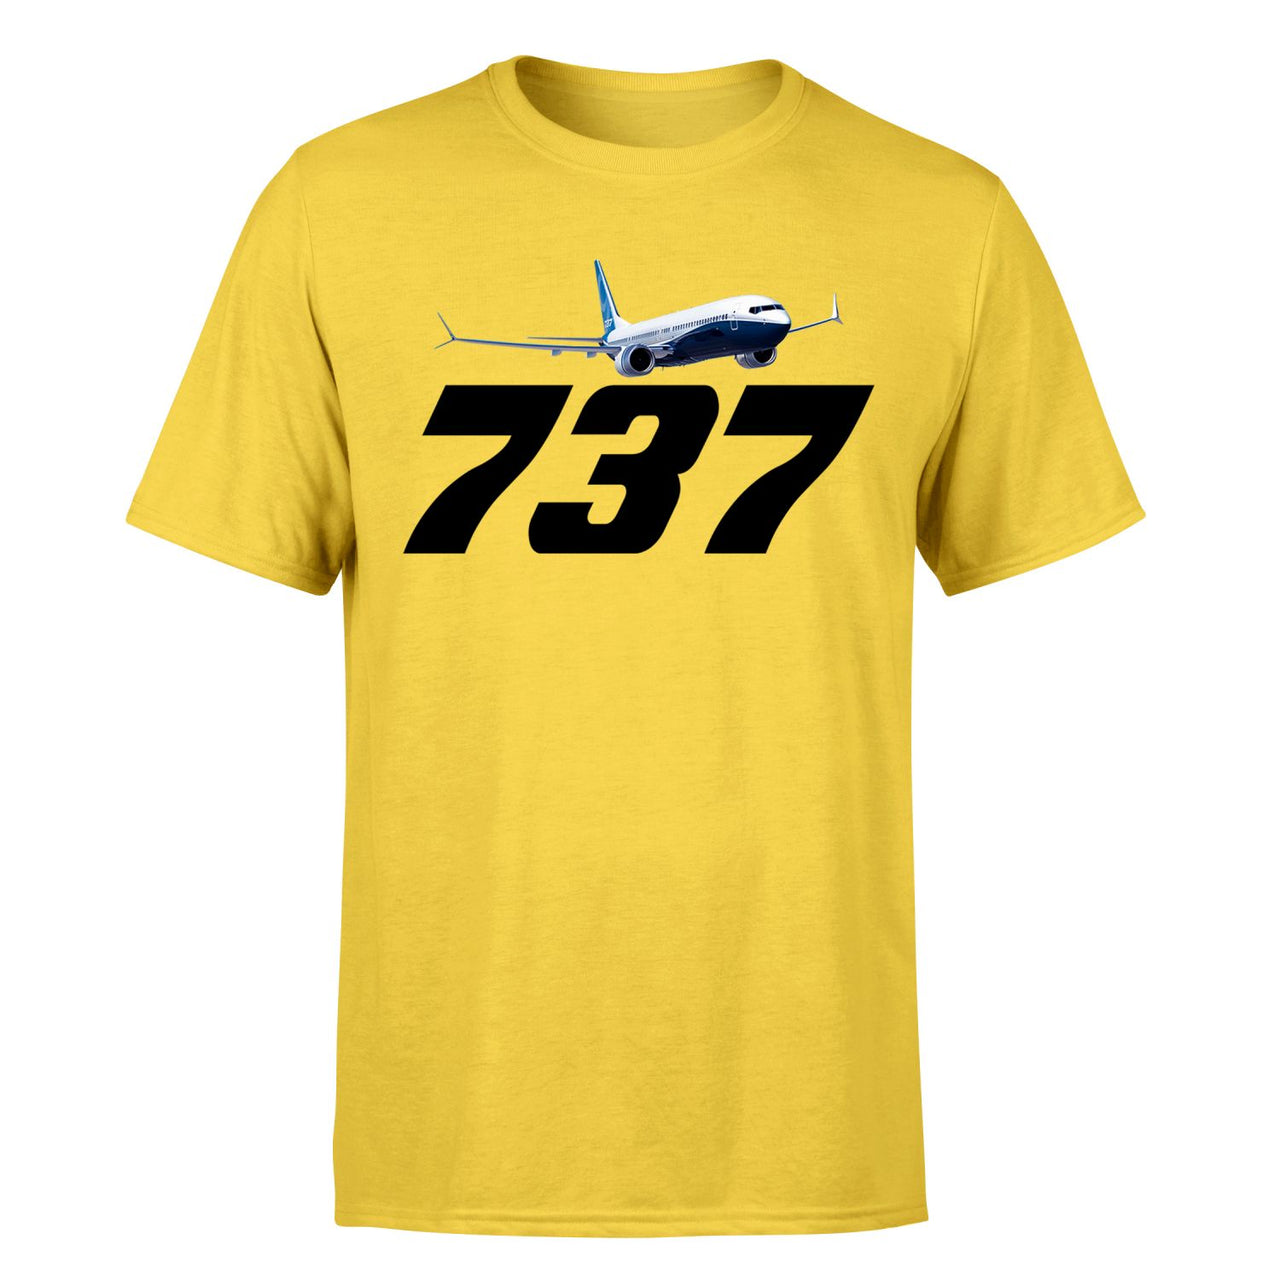 Super Boeing 737-800 Designed T-Shirts